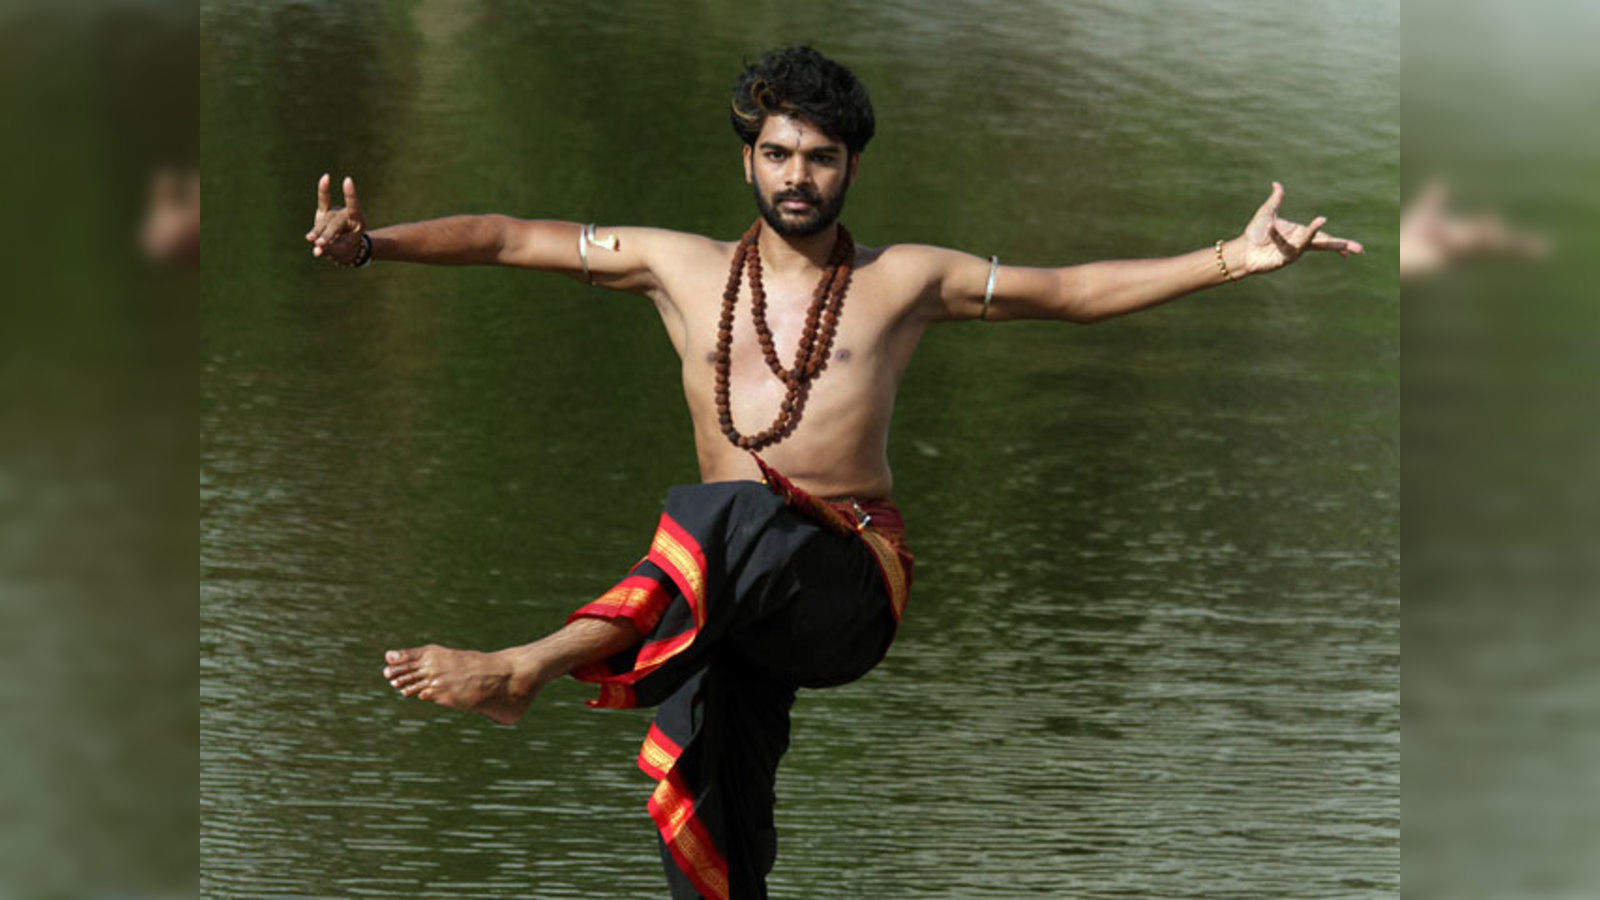 Pin by Sachin Kumar on Photoshoot poses | Mens photoshoot poses, Photoshoot  poses, Poses for men